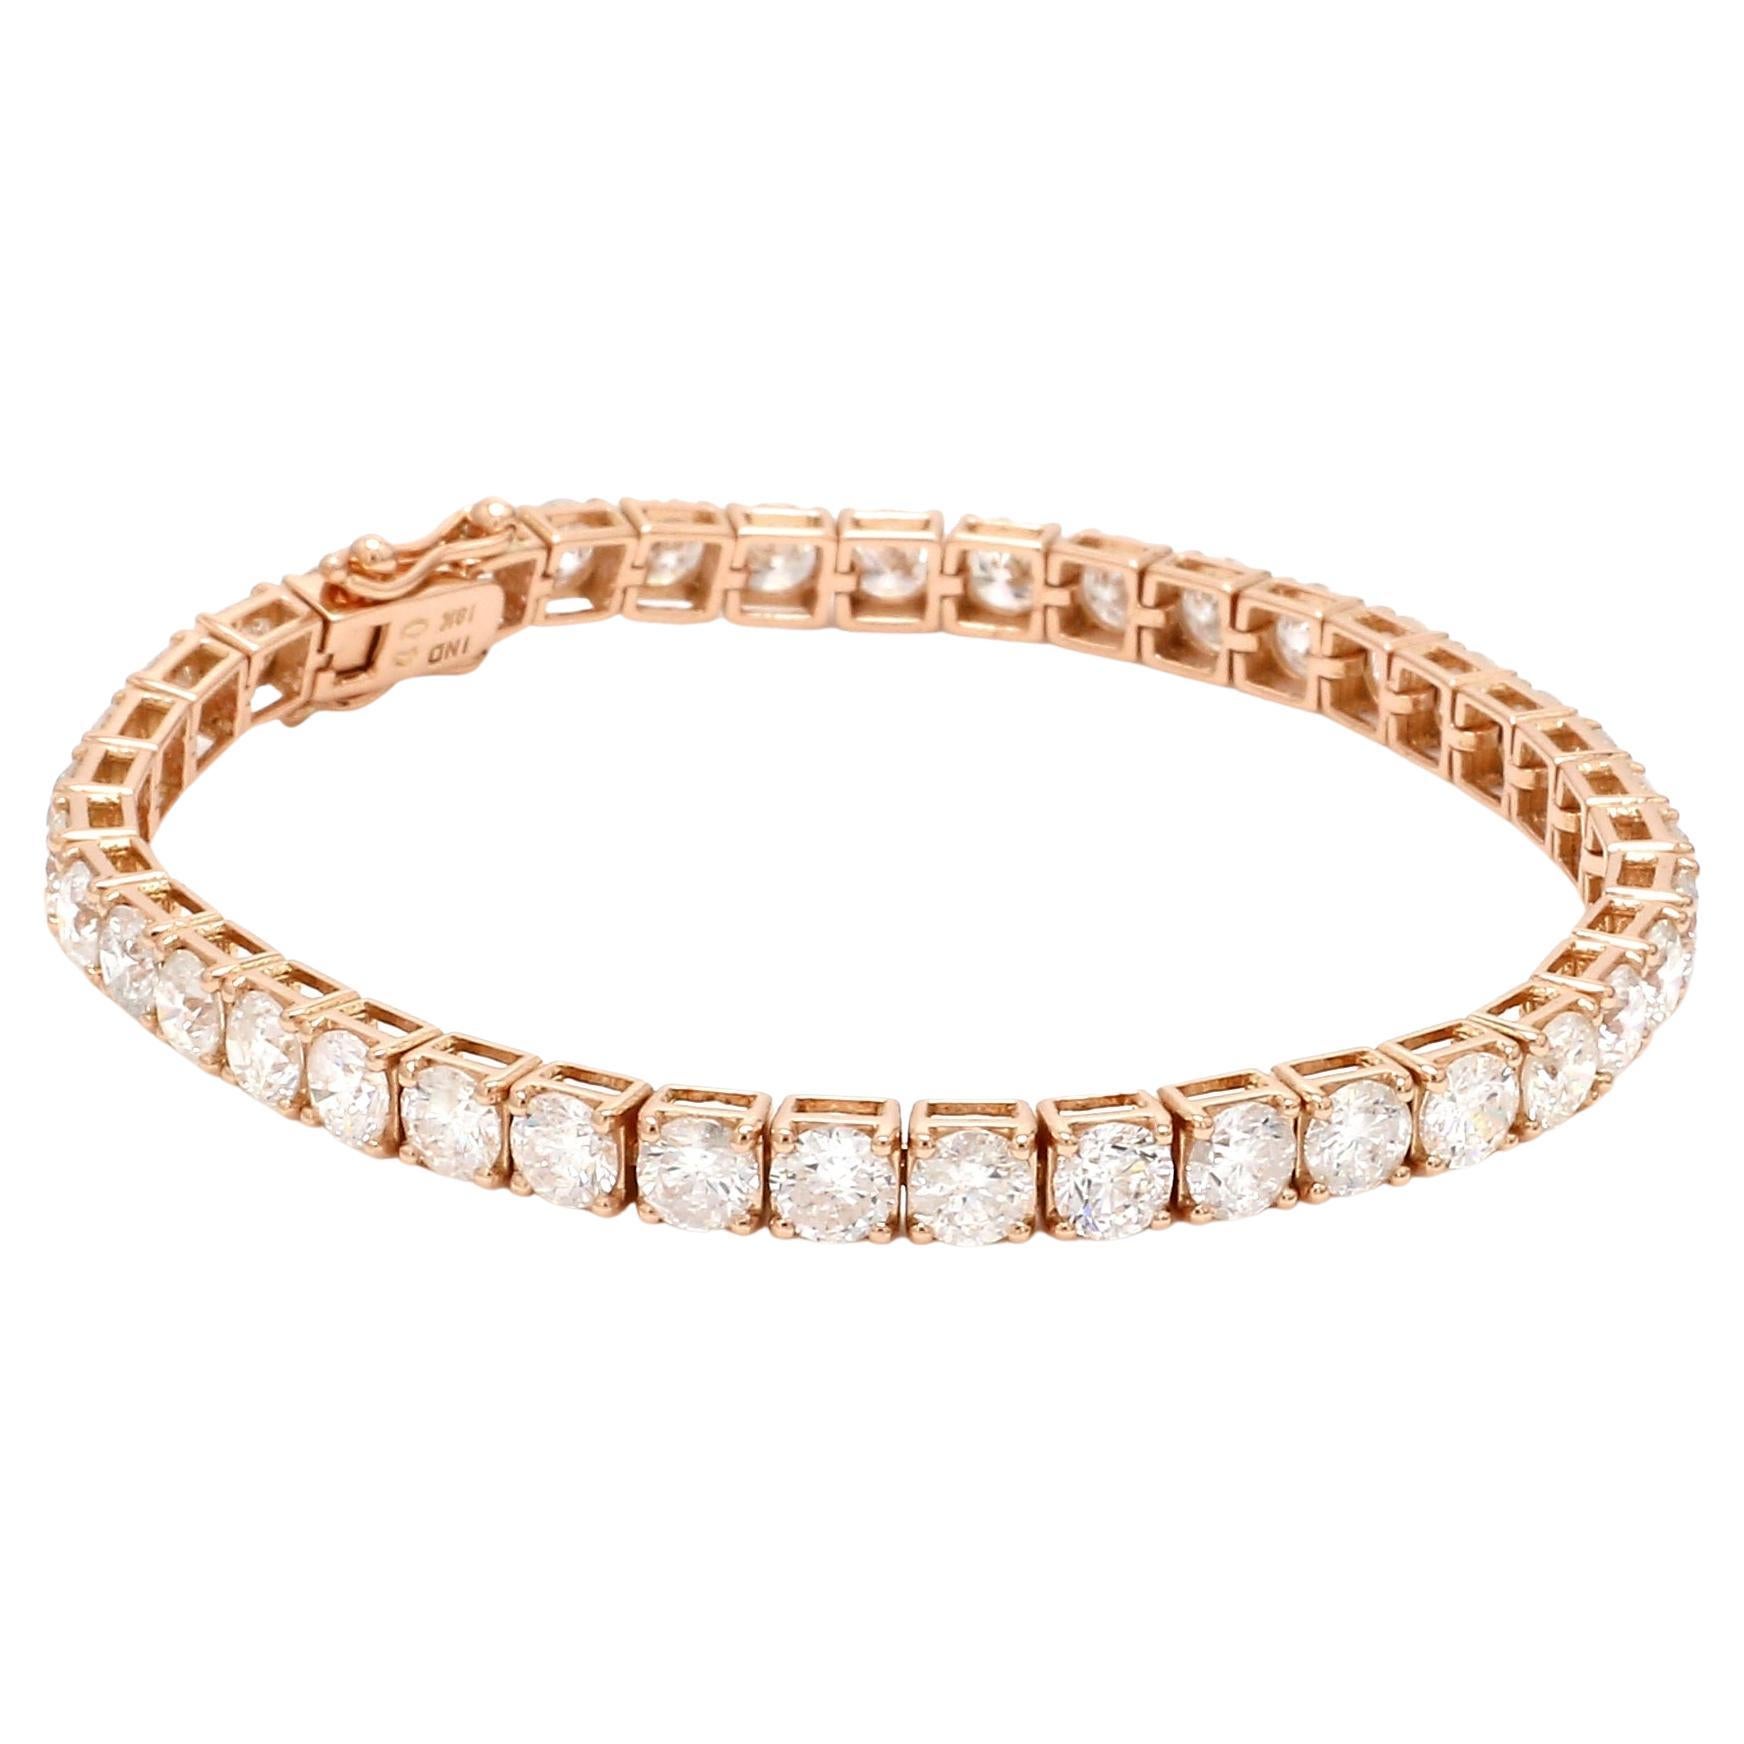 11.7 Carat SI Clarity HI Color Round Diamond Bracelet 18 Karat Rose Gold Jewelry For Sale